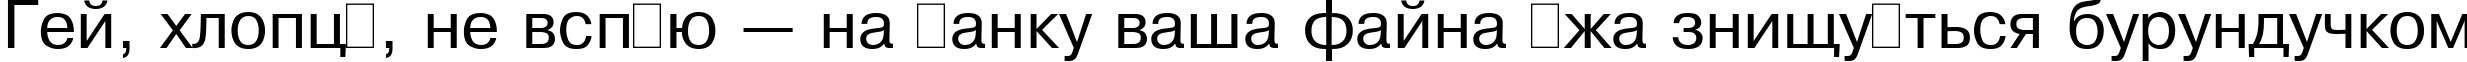 Пример написания шрифтом Pragmatica Plain:001.001 текста на украинском